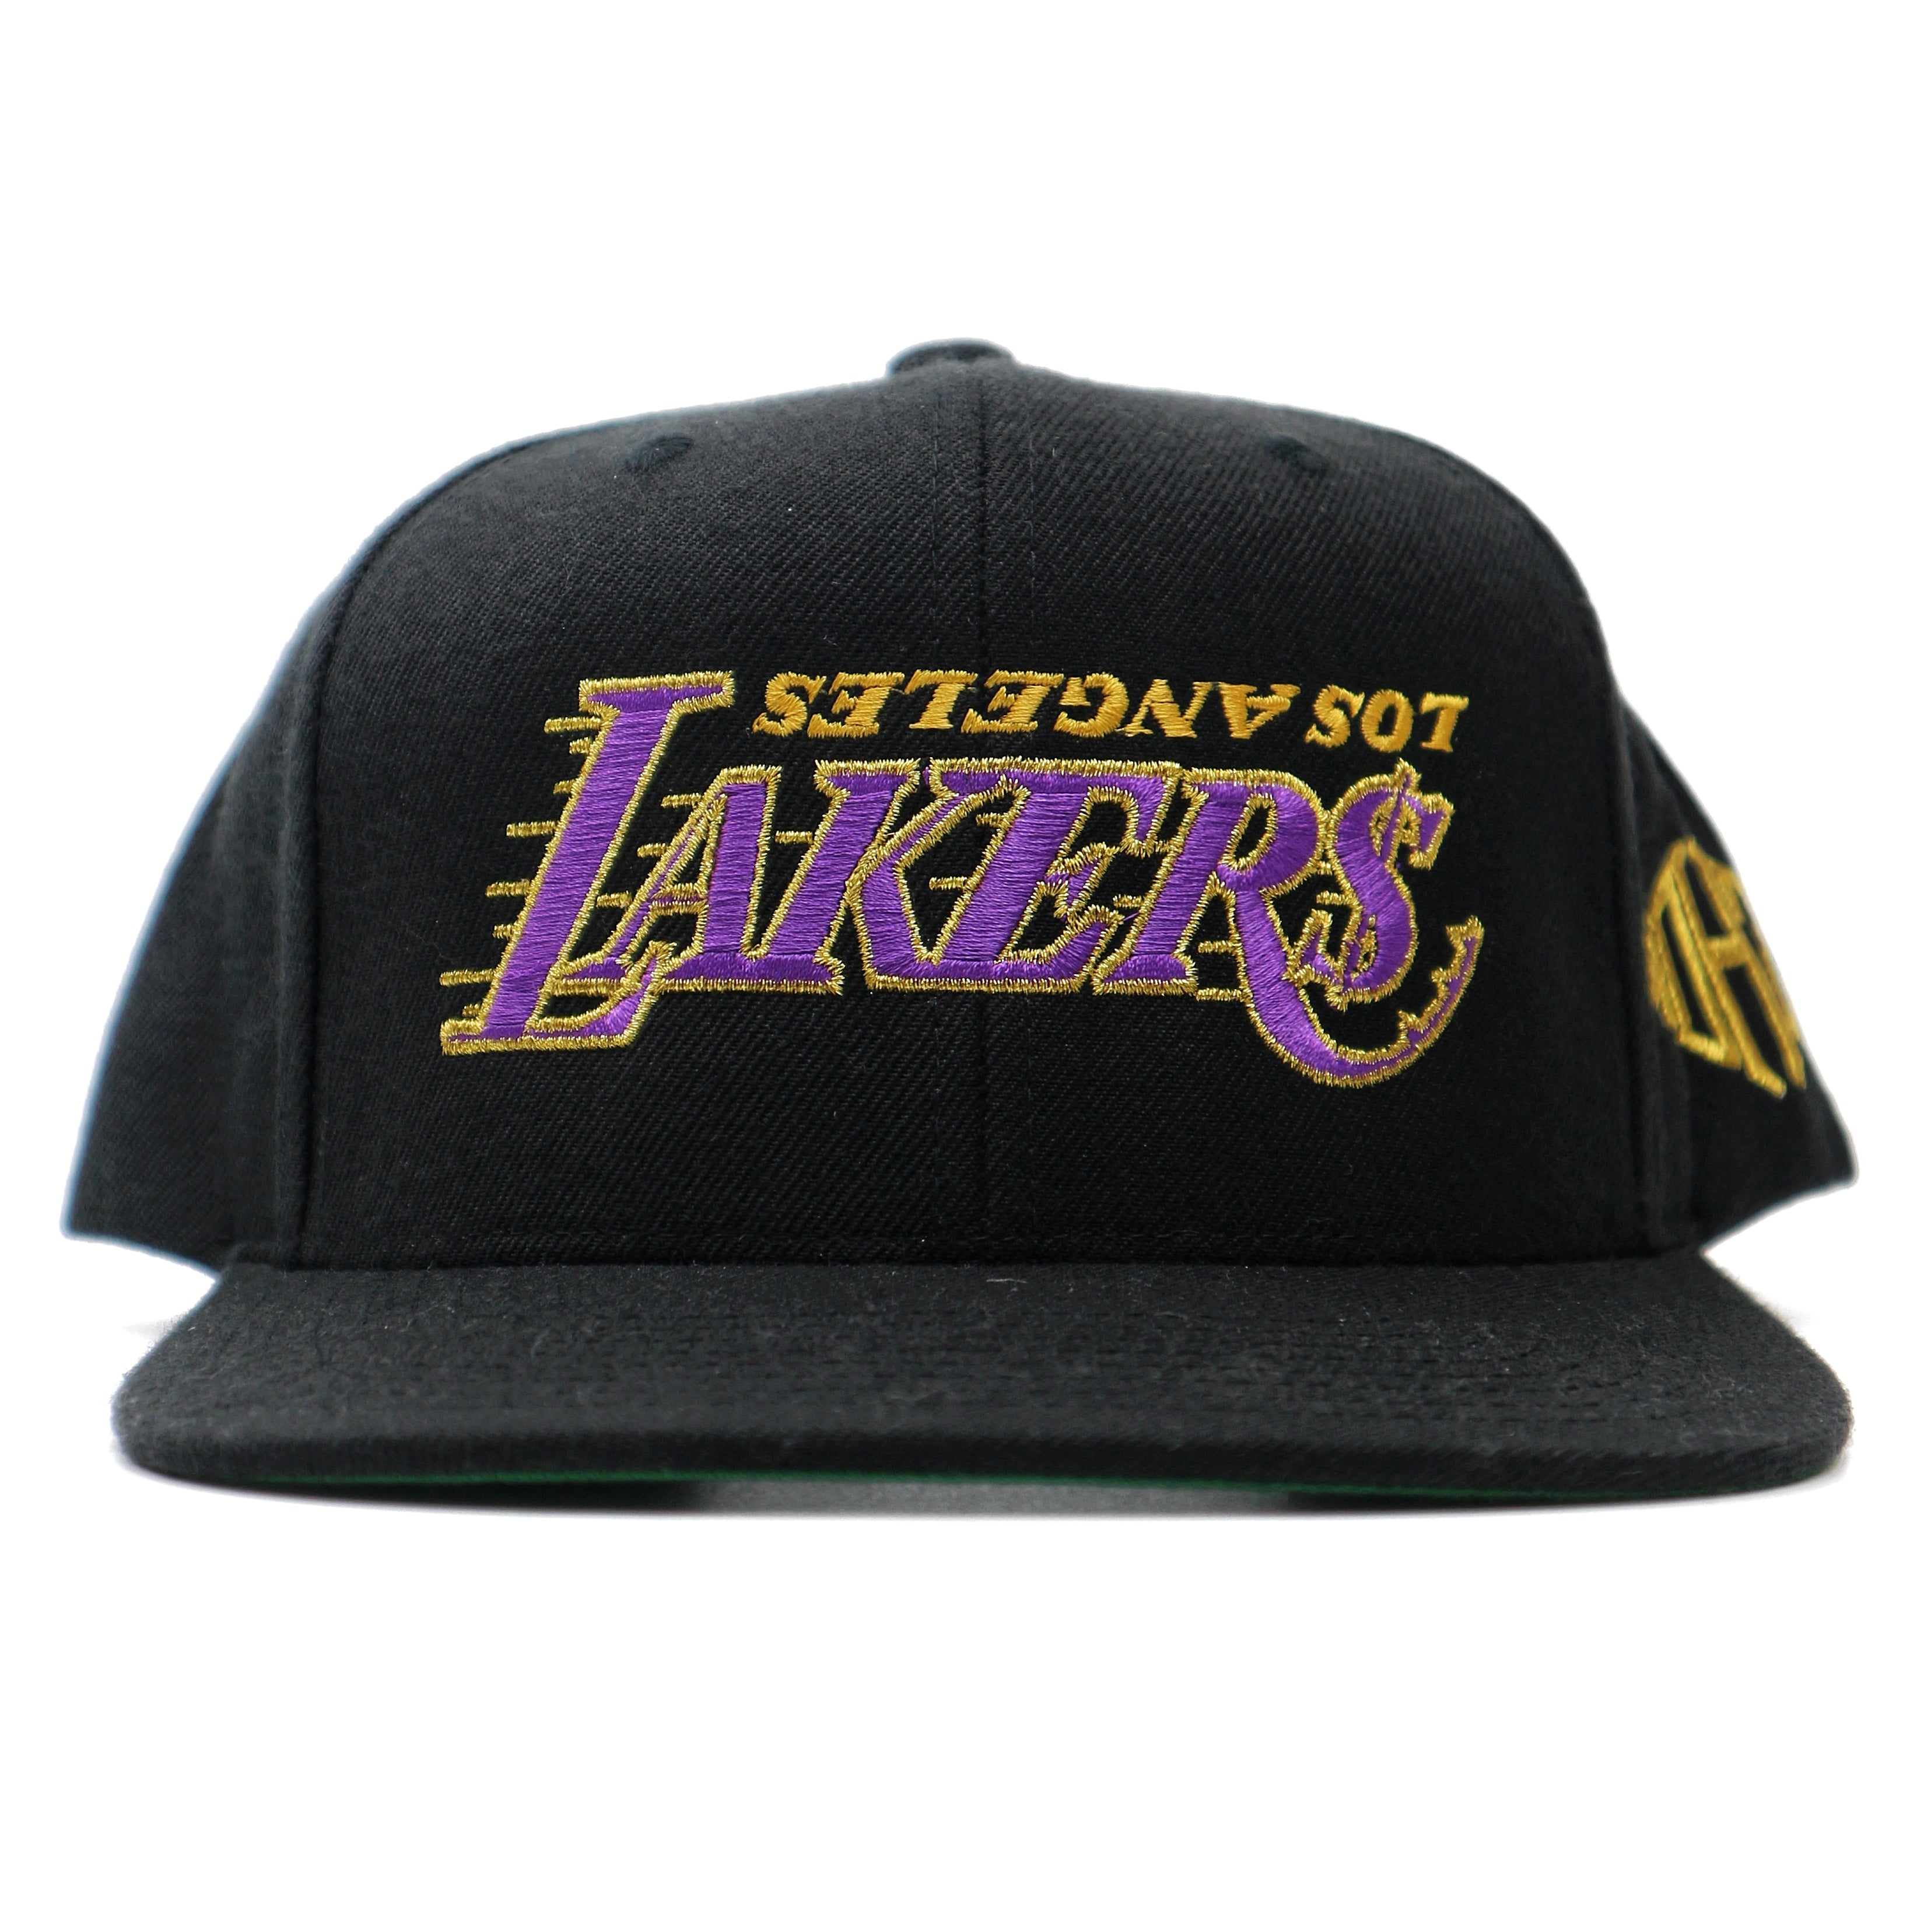 Kill The Hype "Los Angeles" Lakers